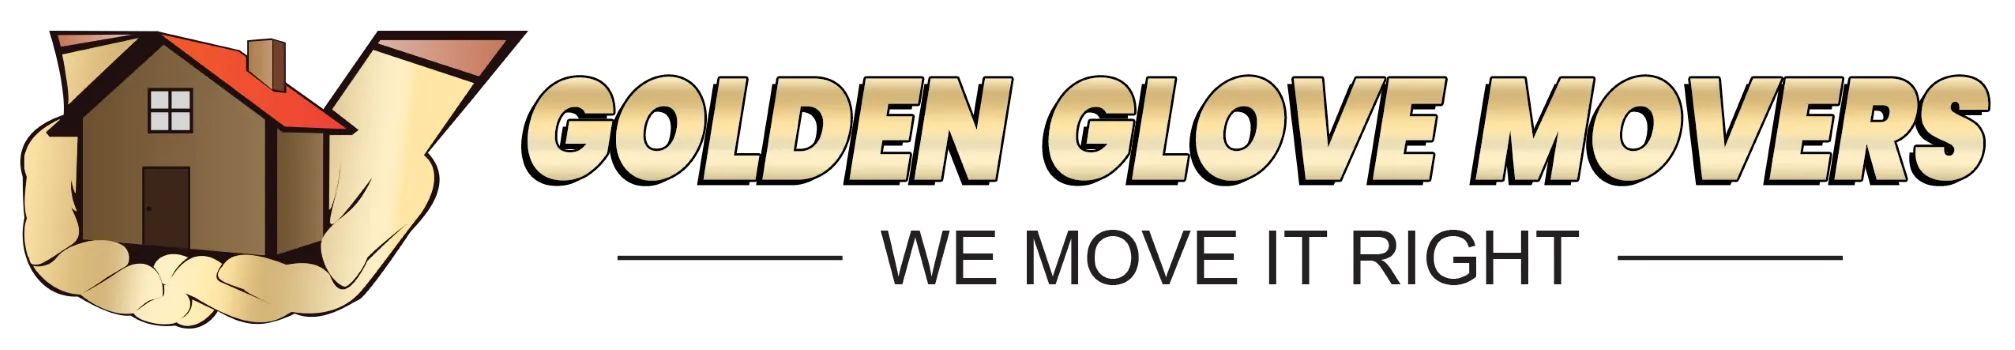 Golden Glove Movers logo